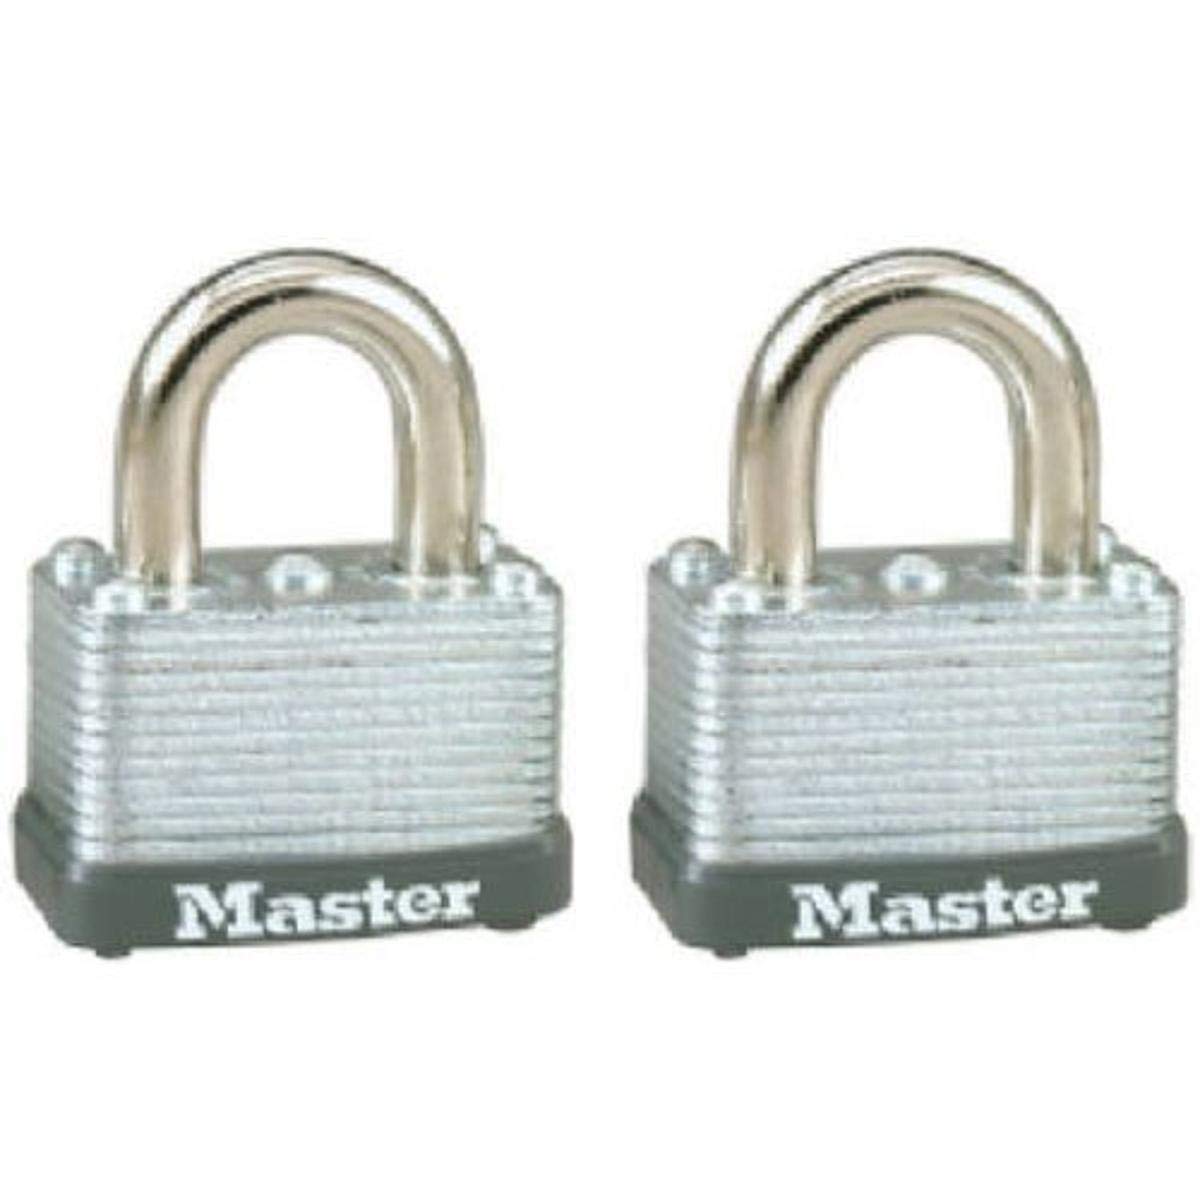 Master Lock 22T Keyed Alike Warded Padlock, 1-1/2 Inch, 2-Pack